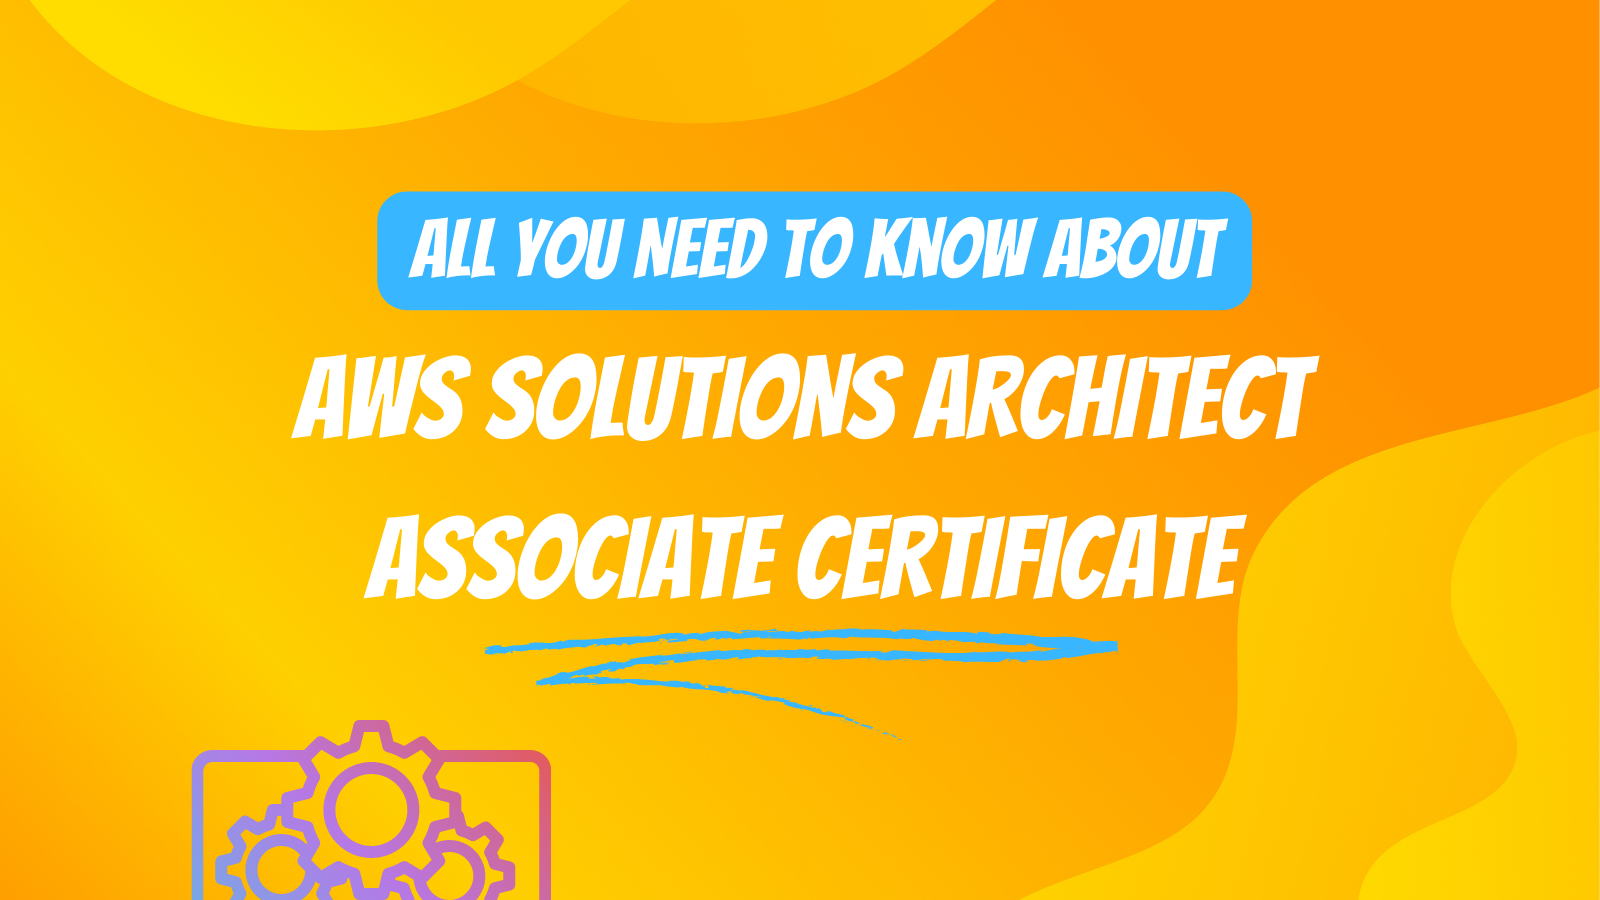 AWS Solutions Architect Associate